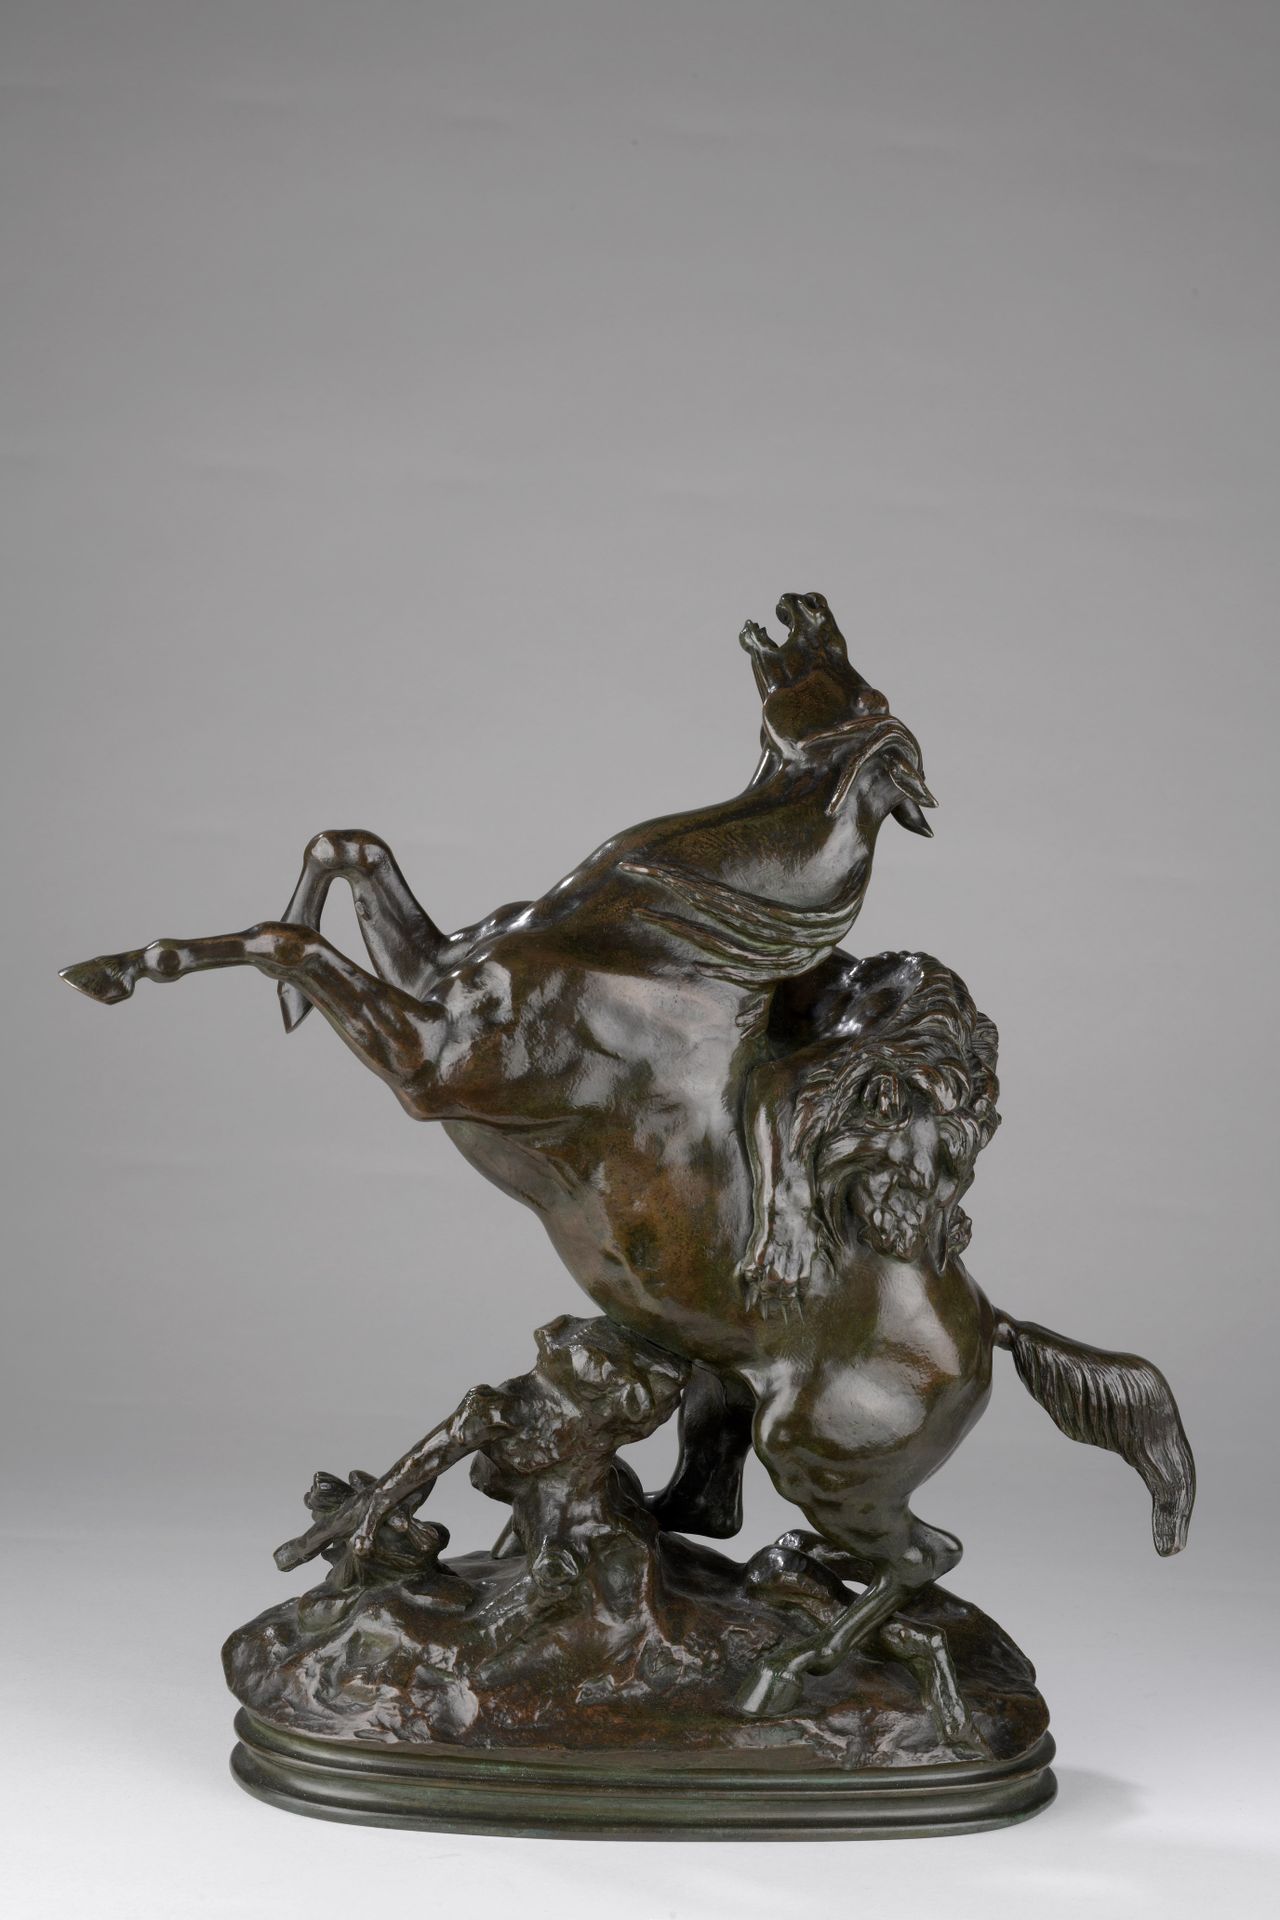 Null 安托万-路易-巴耶 (1795-1875)
被狮子惊吓的马（第二版）
1857年至1875年间由巴耶工作室铸造 
青铜，有棕绿色阴影的铜锈
署名 "B&hellip;